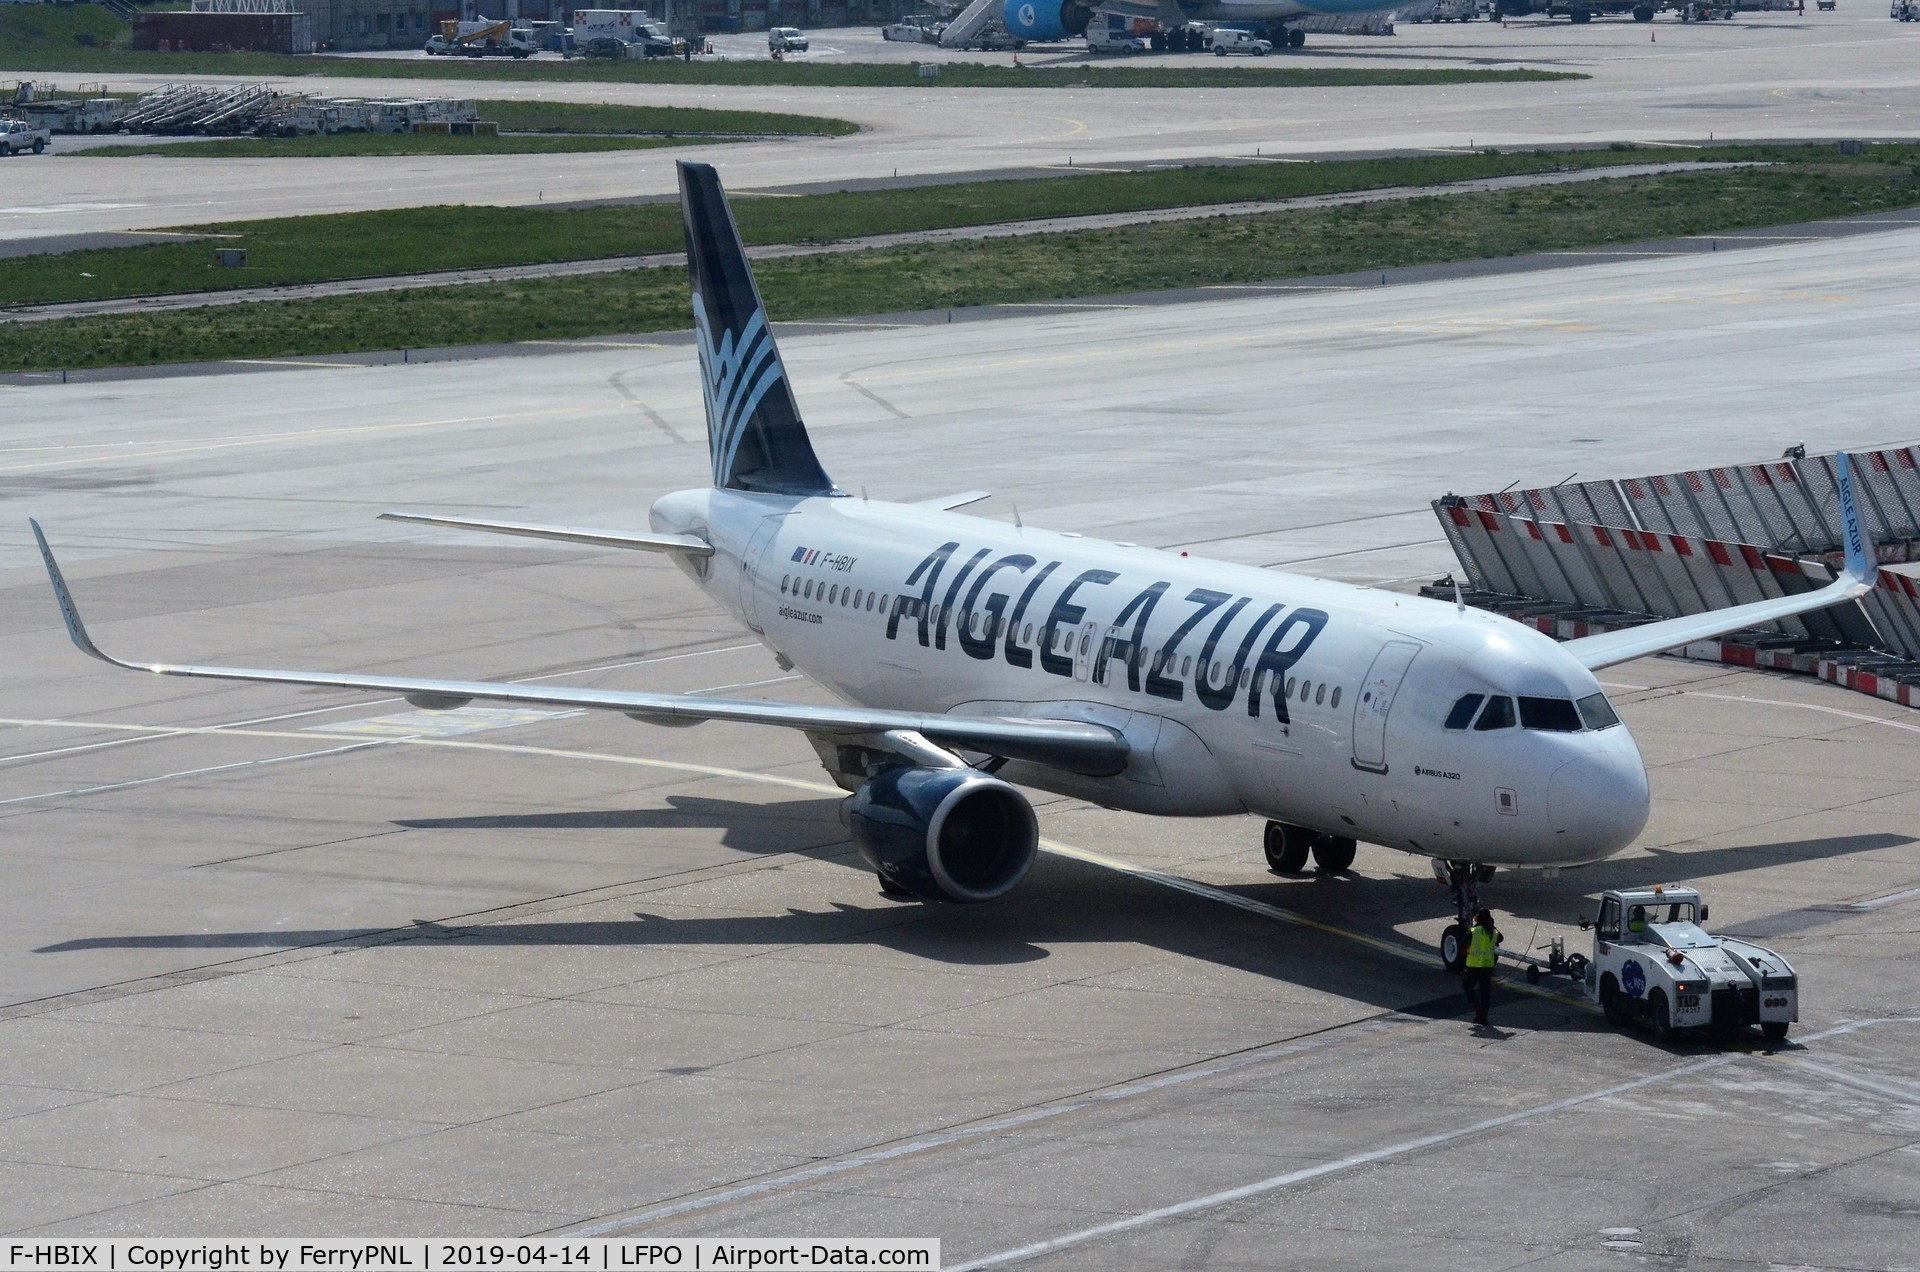 F-HBIX, 2014 Airbus A320-214 C/N 6012, Push-back of Aigle Azur A320